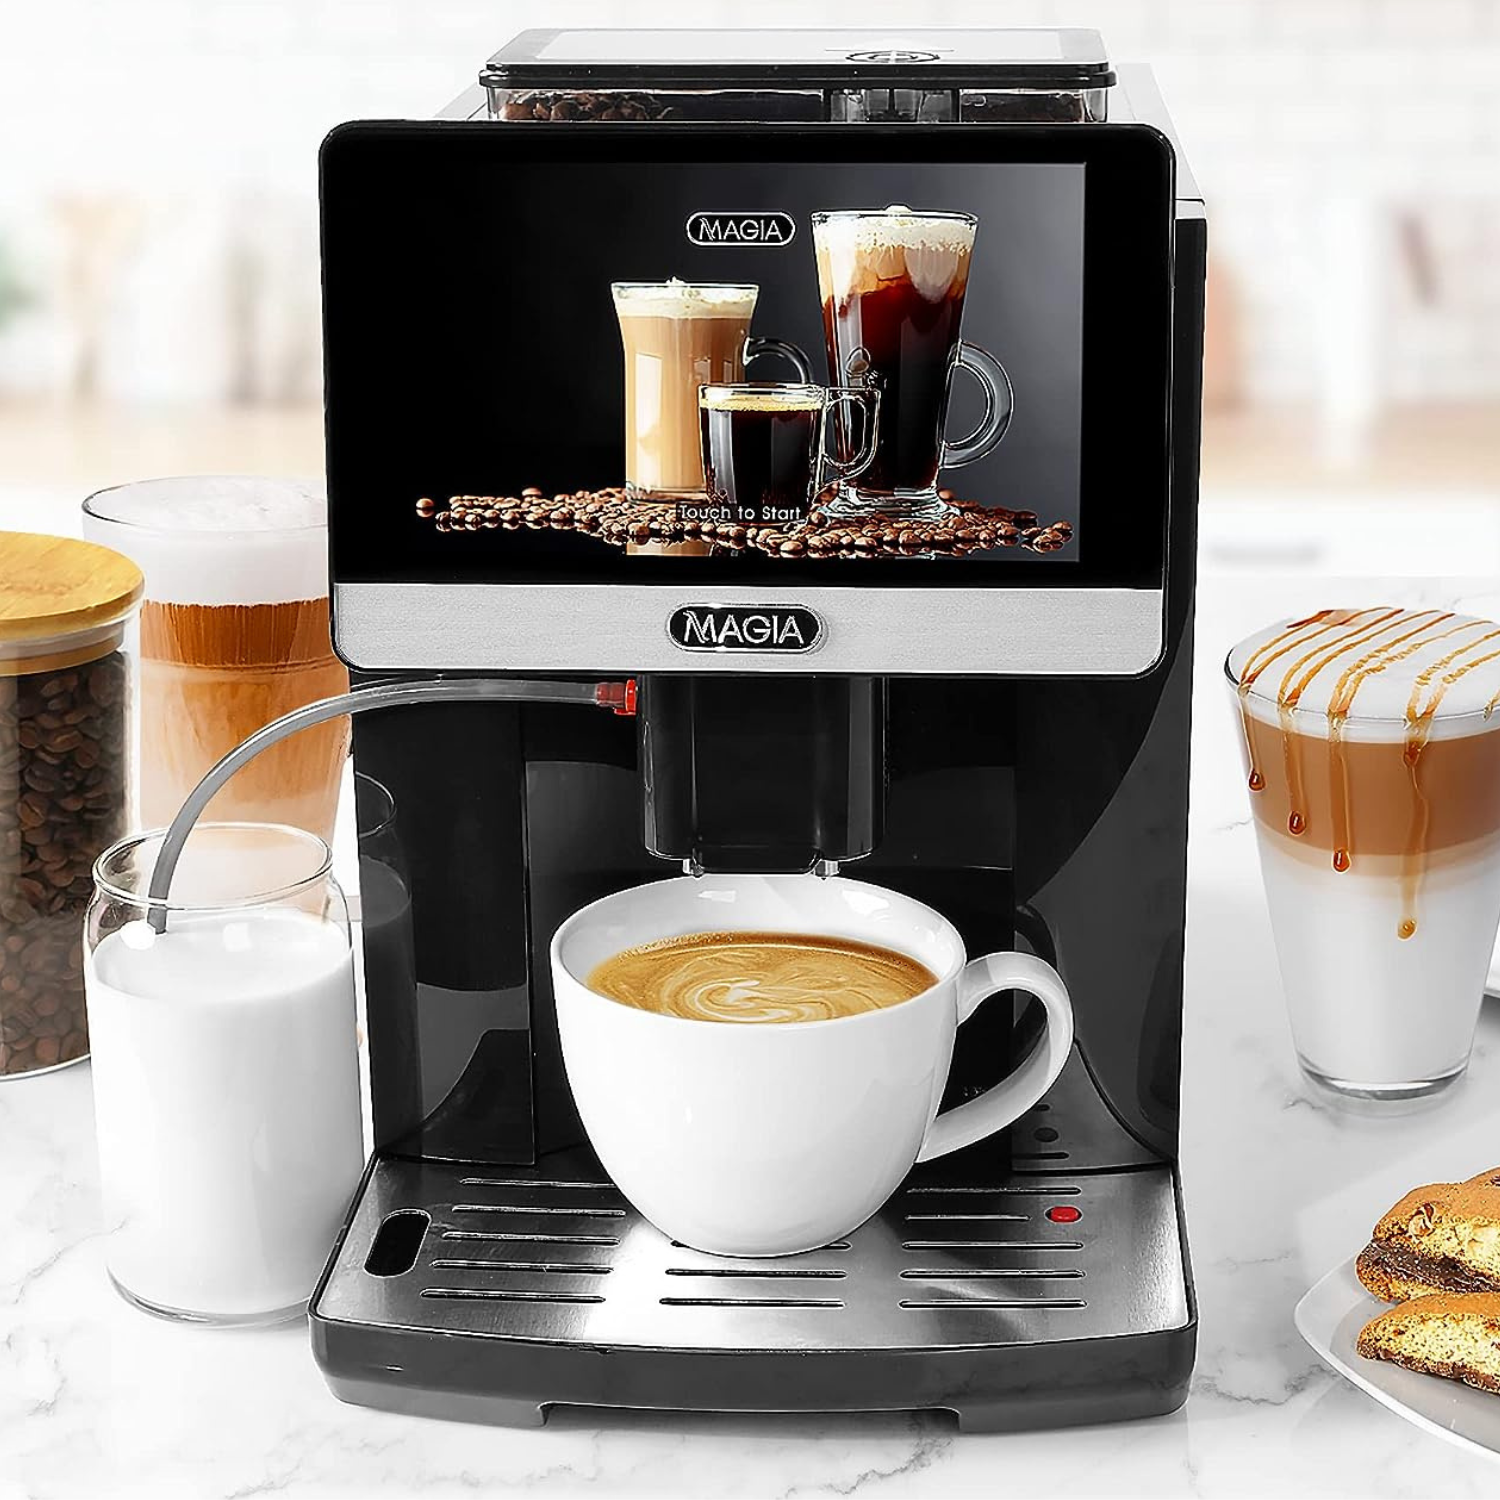 Why Choose Our Zulay Magia Super Automatic Espresso Machine?